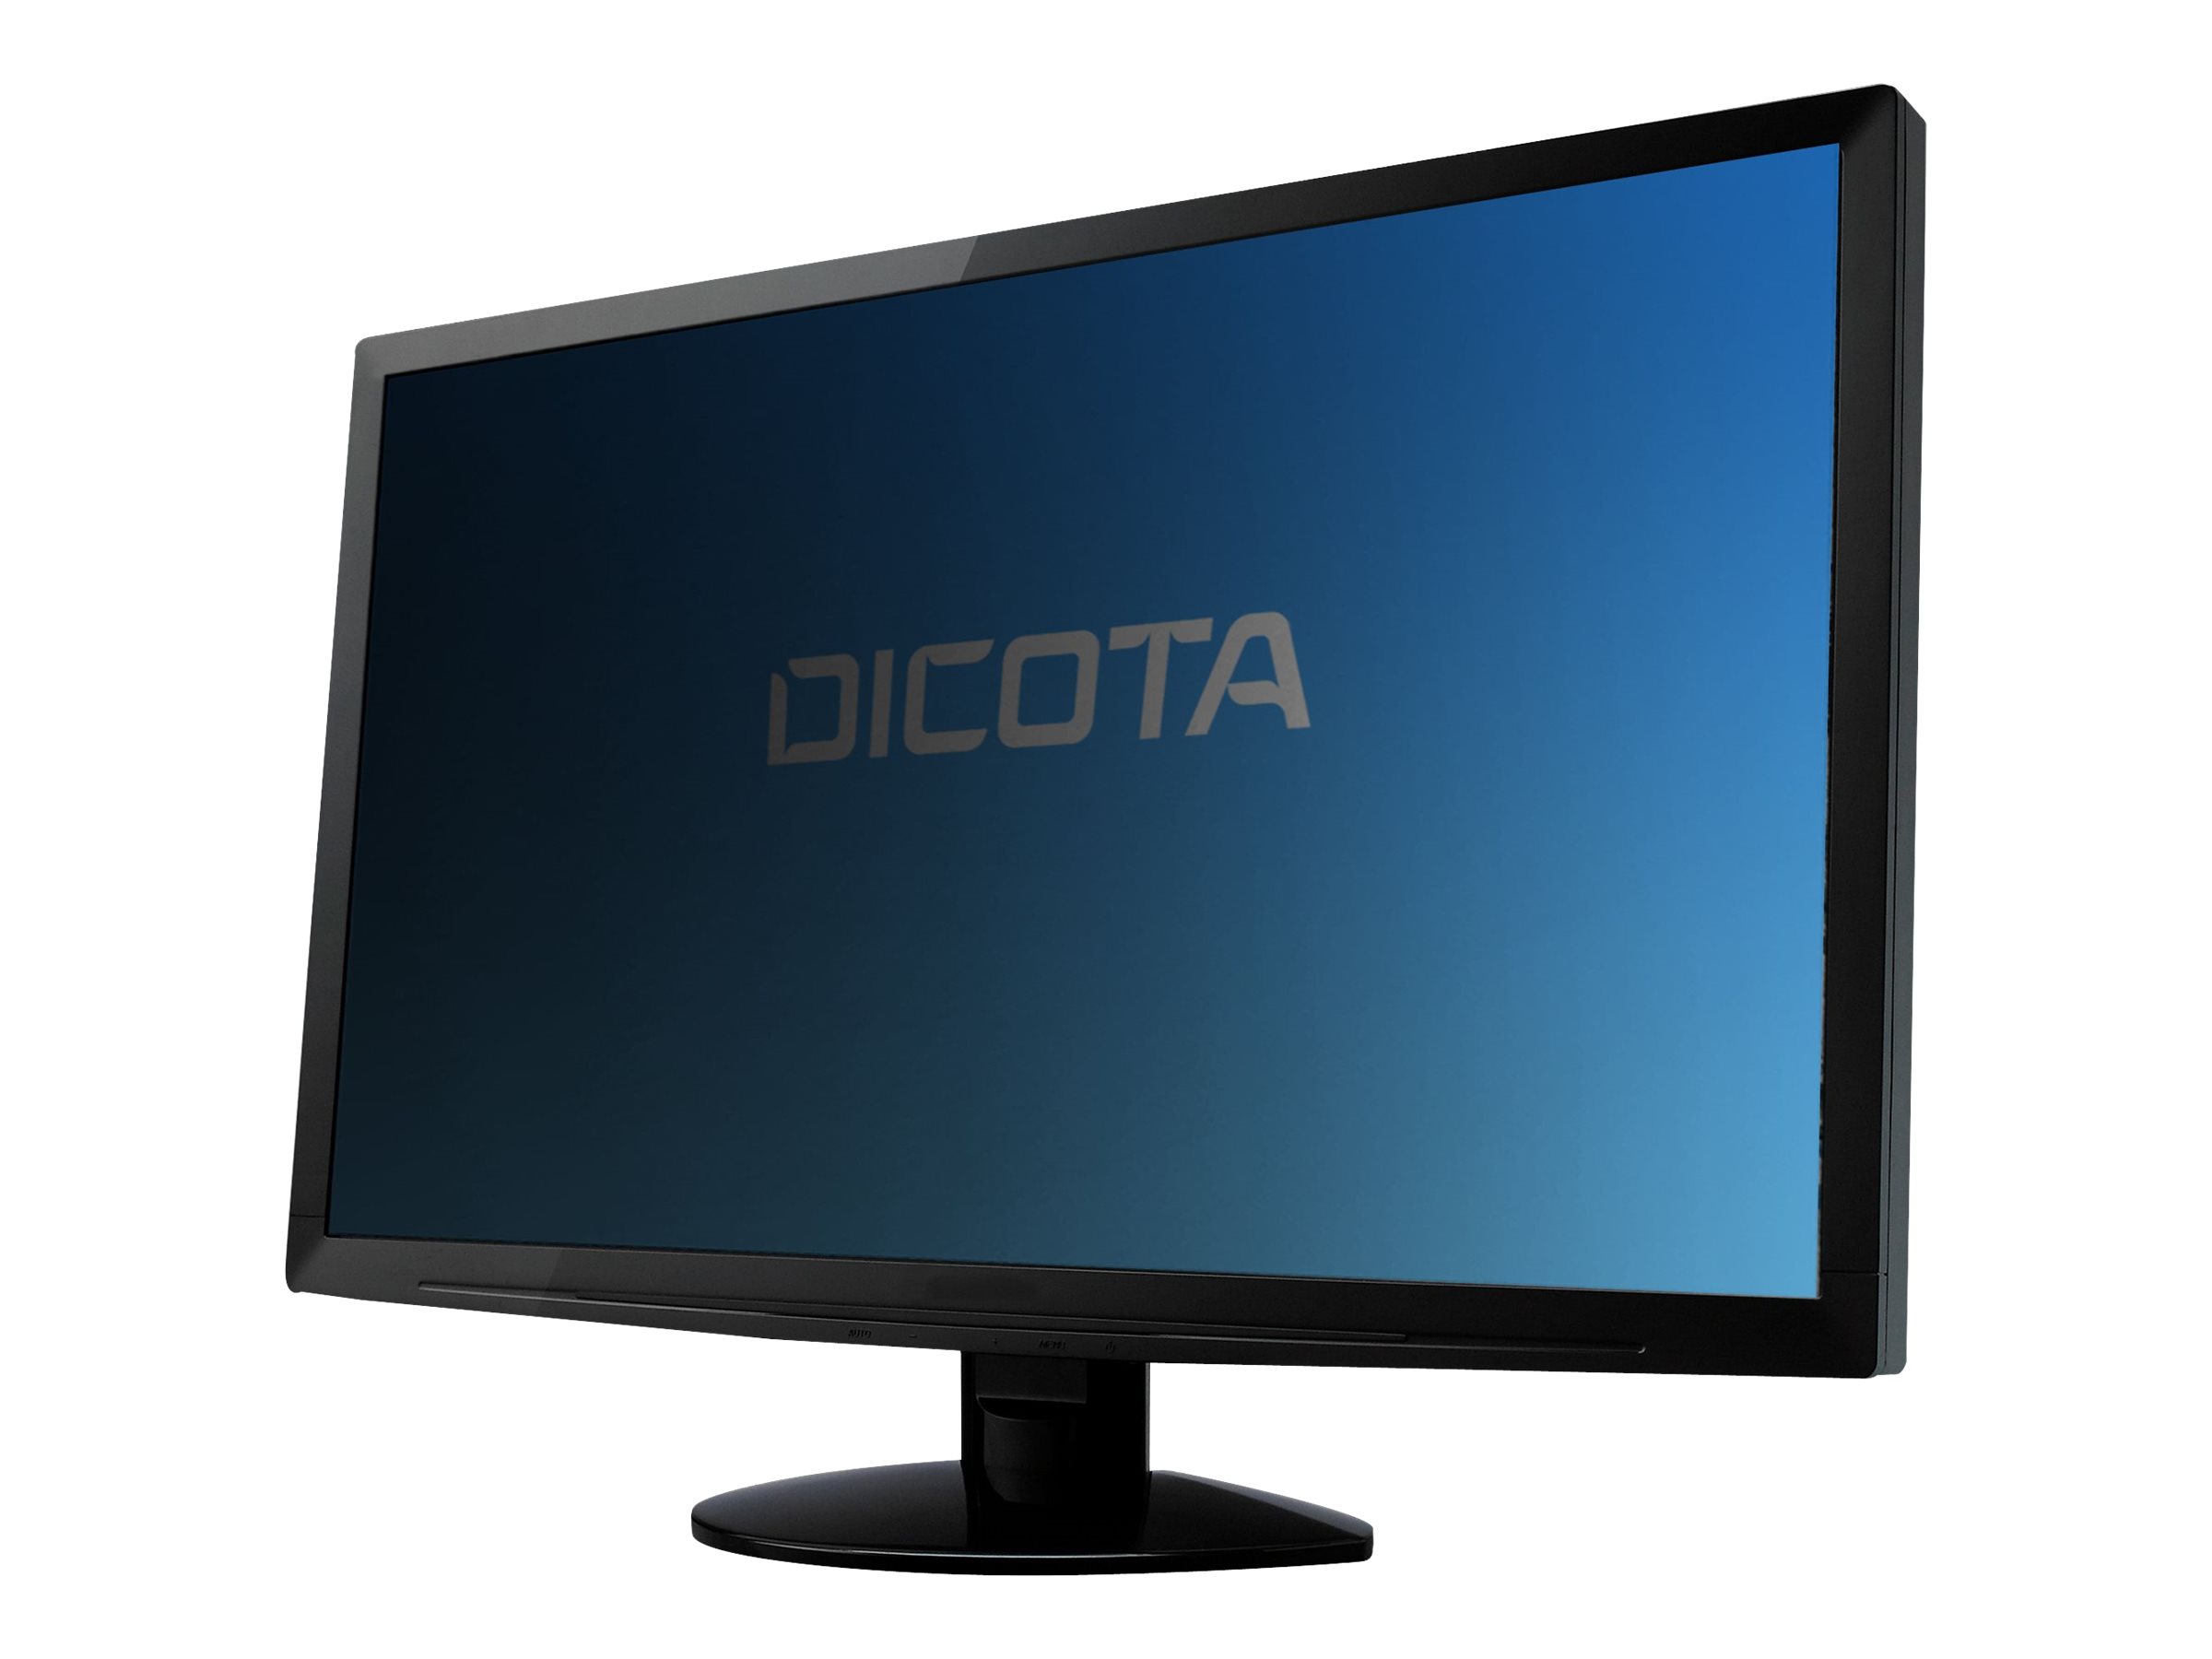 DICOTA Secret - Blickschutzfilter für Bildschirme - 2-Wege - klebend - 60.5 cm wide (23,8 Zoll Breitbild) - Schwarz